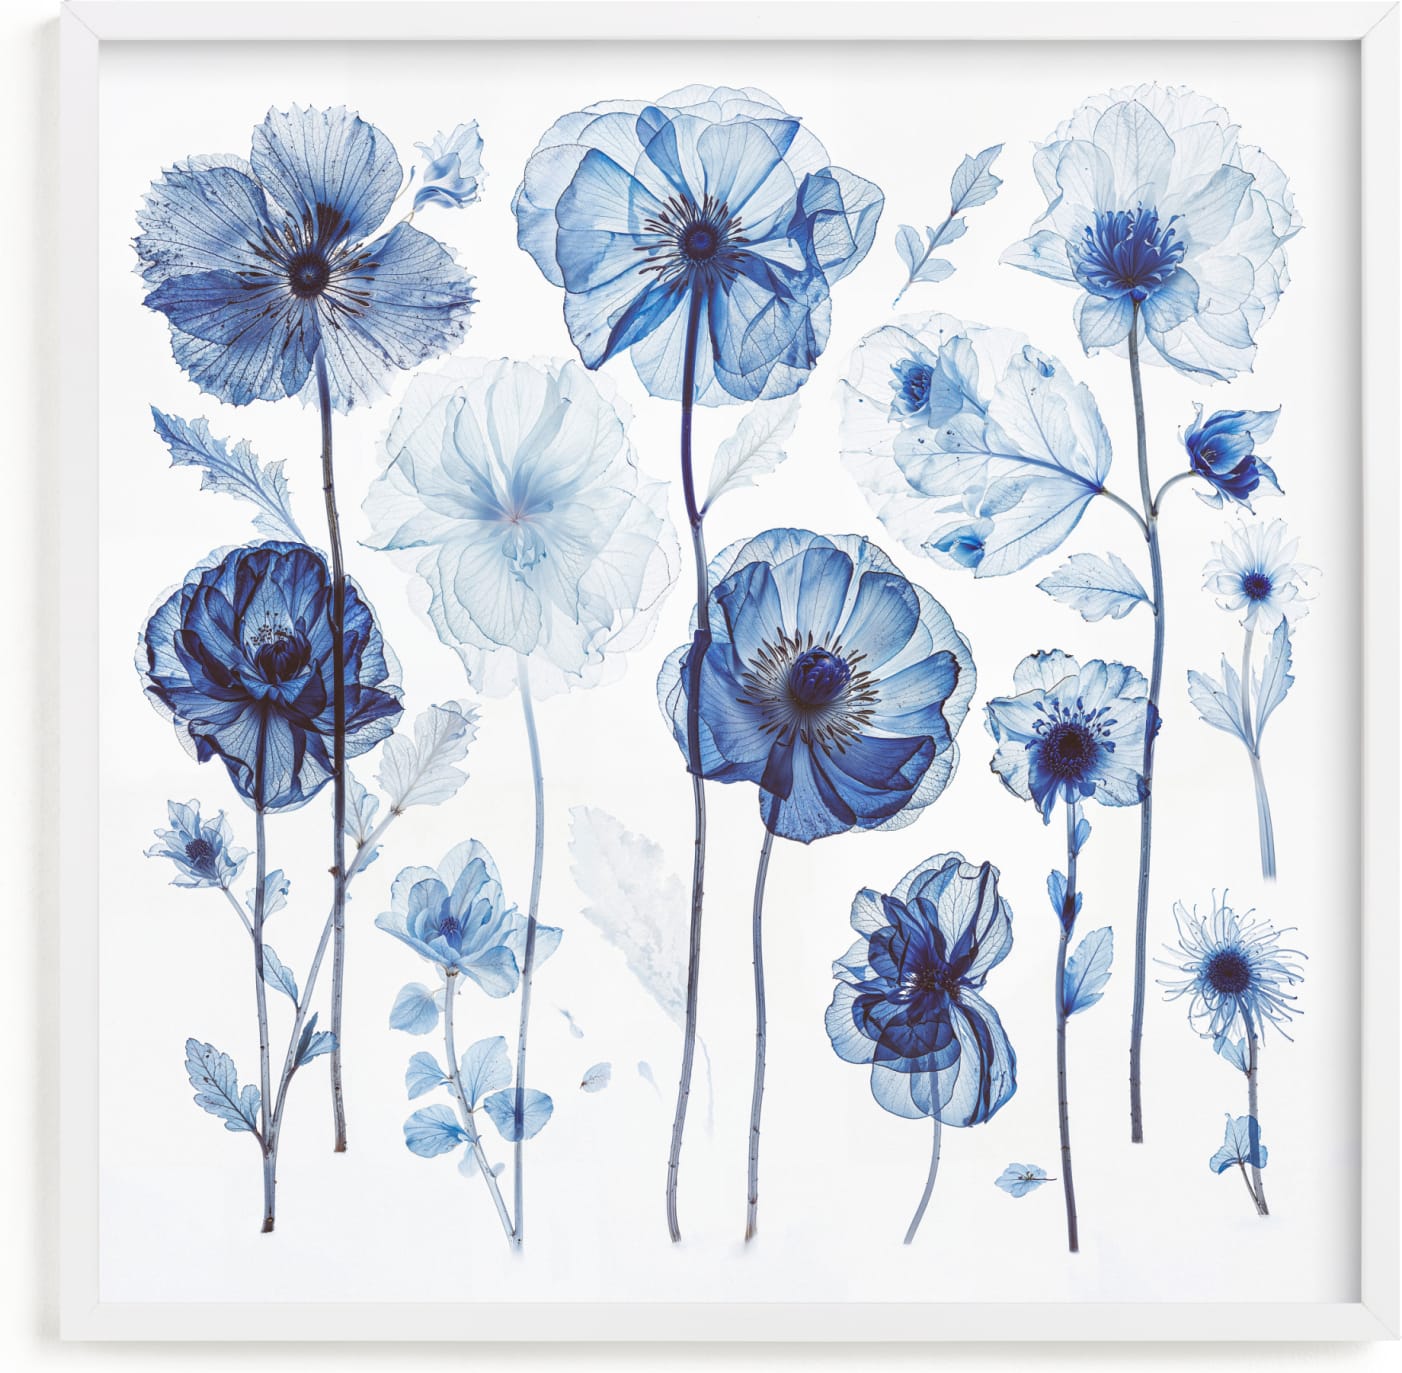 This is a blue art by Elena Kulikova called Blue Arrangement.